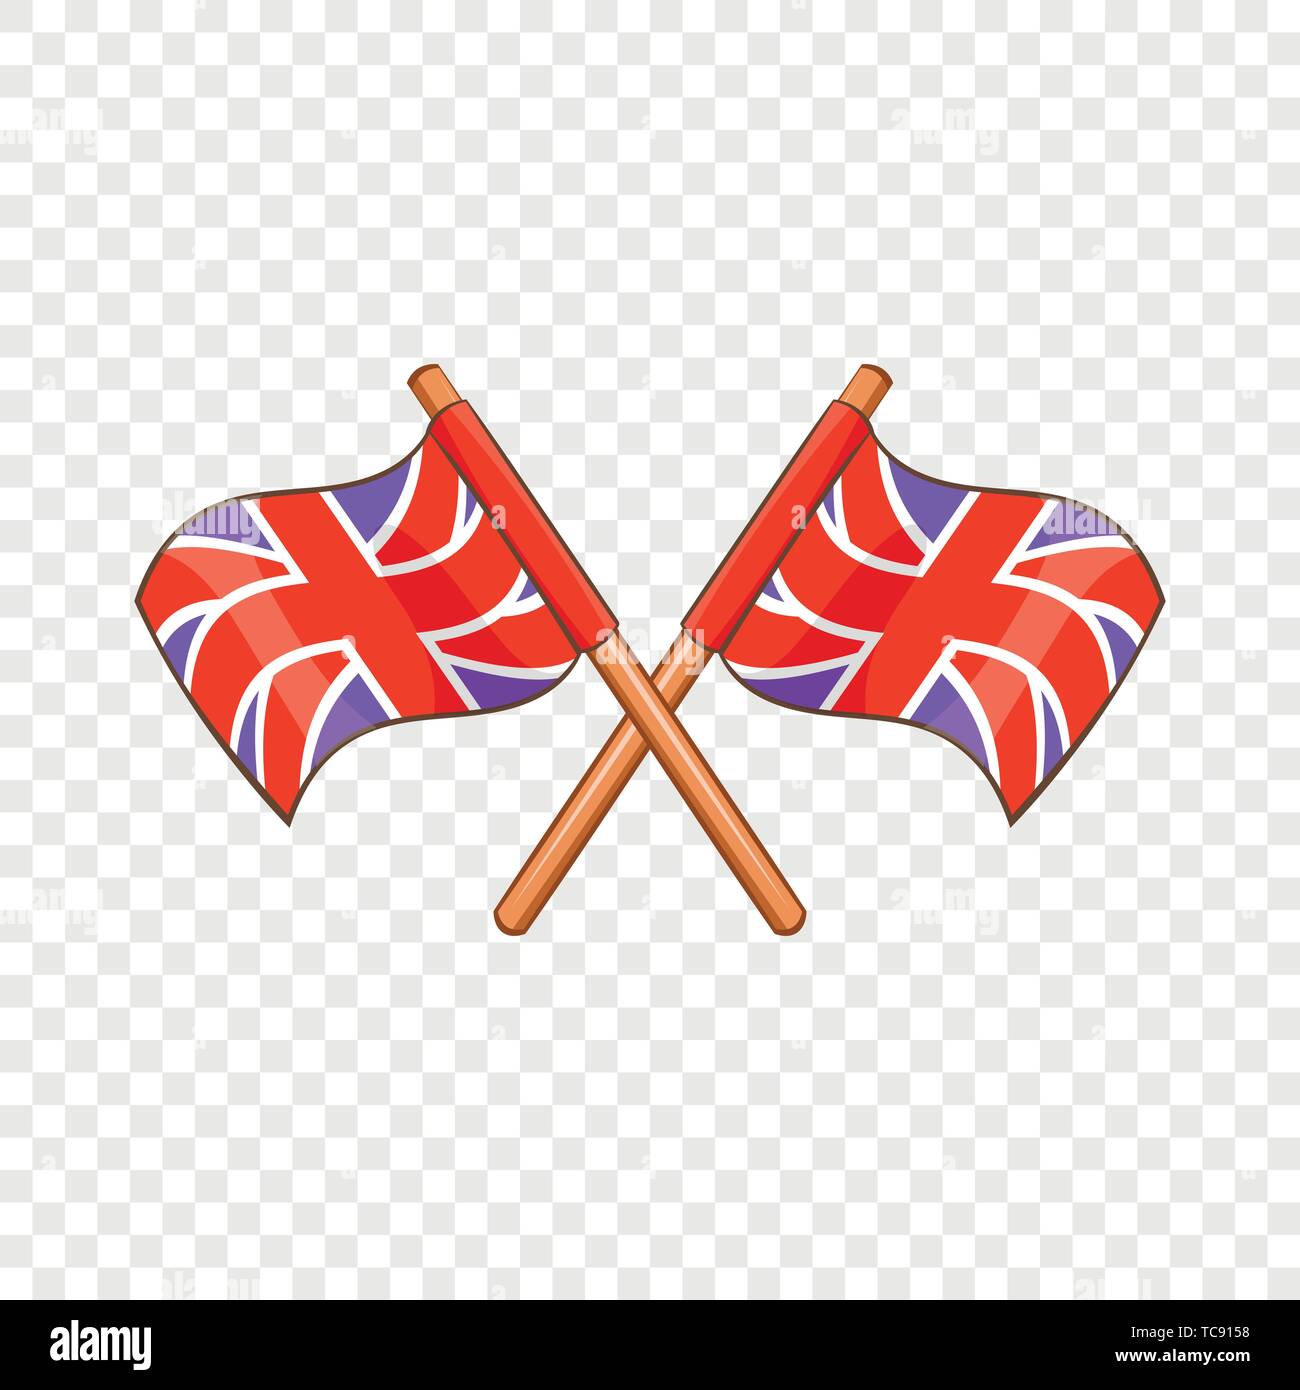 Great Britain Flaggensymbol Cartoon Stil Stock Vektorgrafik Alamy